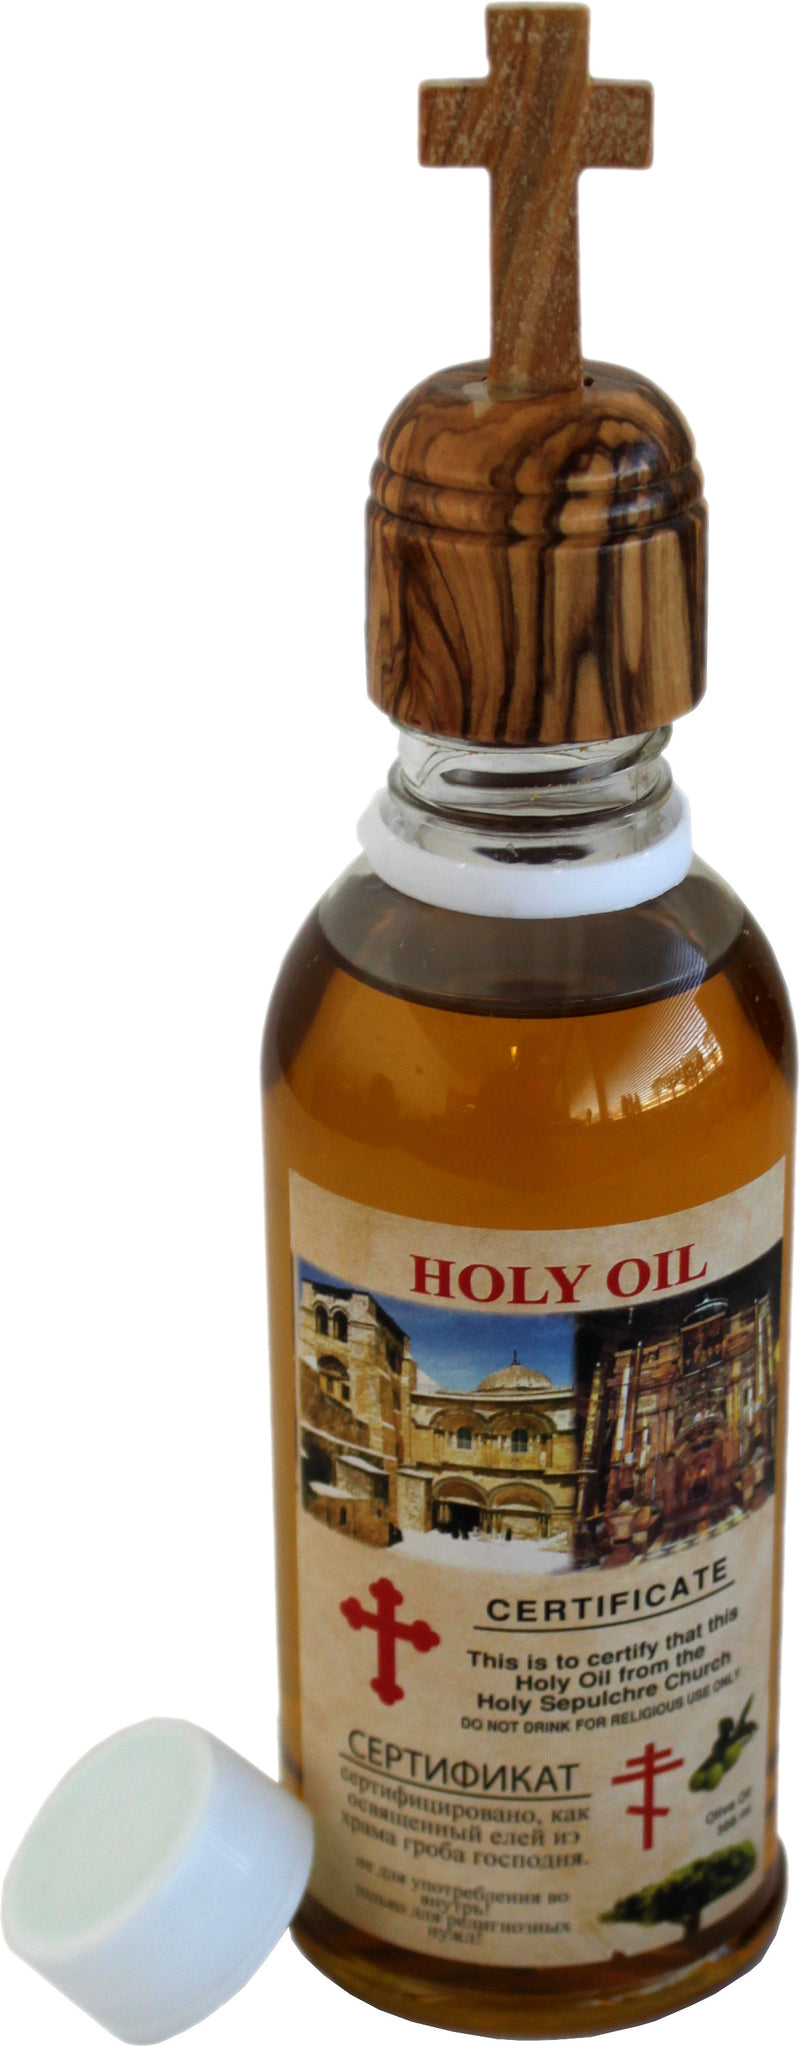 Jerusalem Holy Sepulchre Anointing Oil - 200ml (200ml - 6.8 oz)